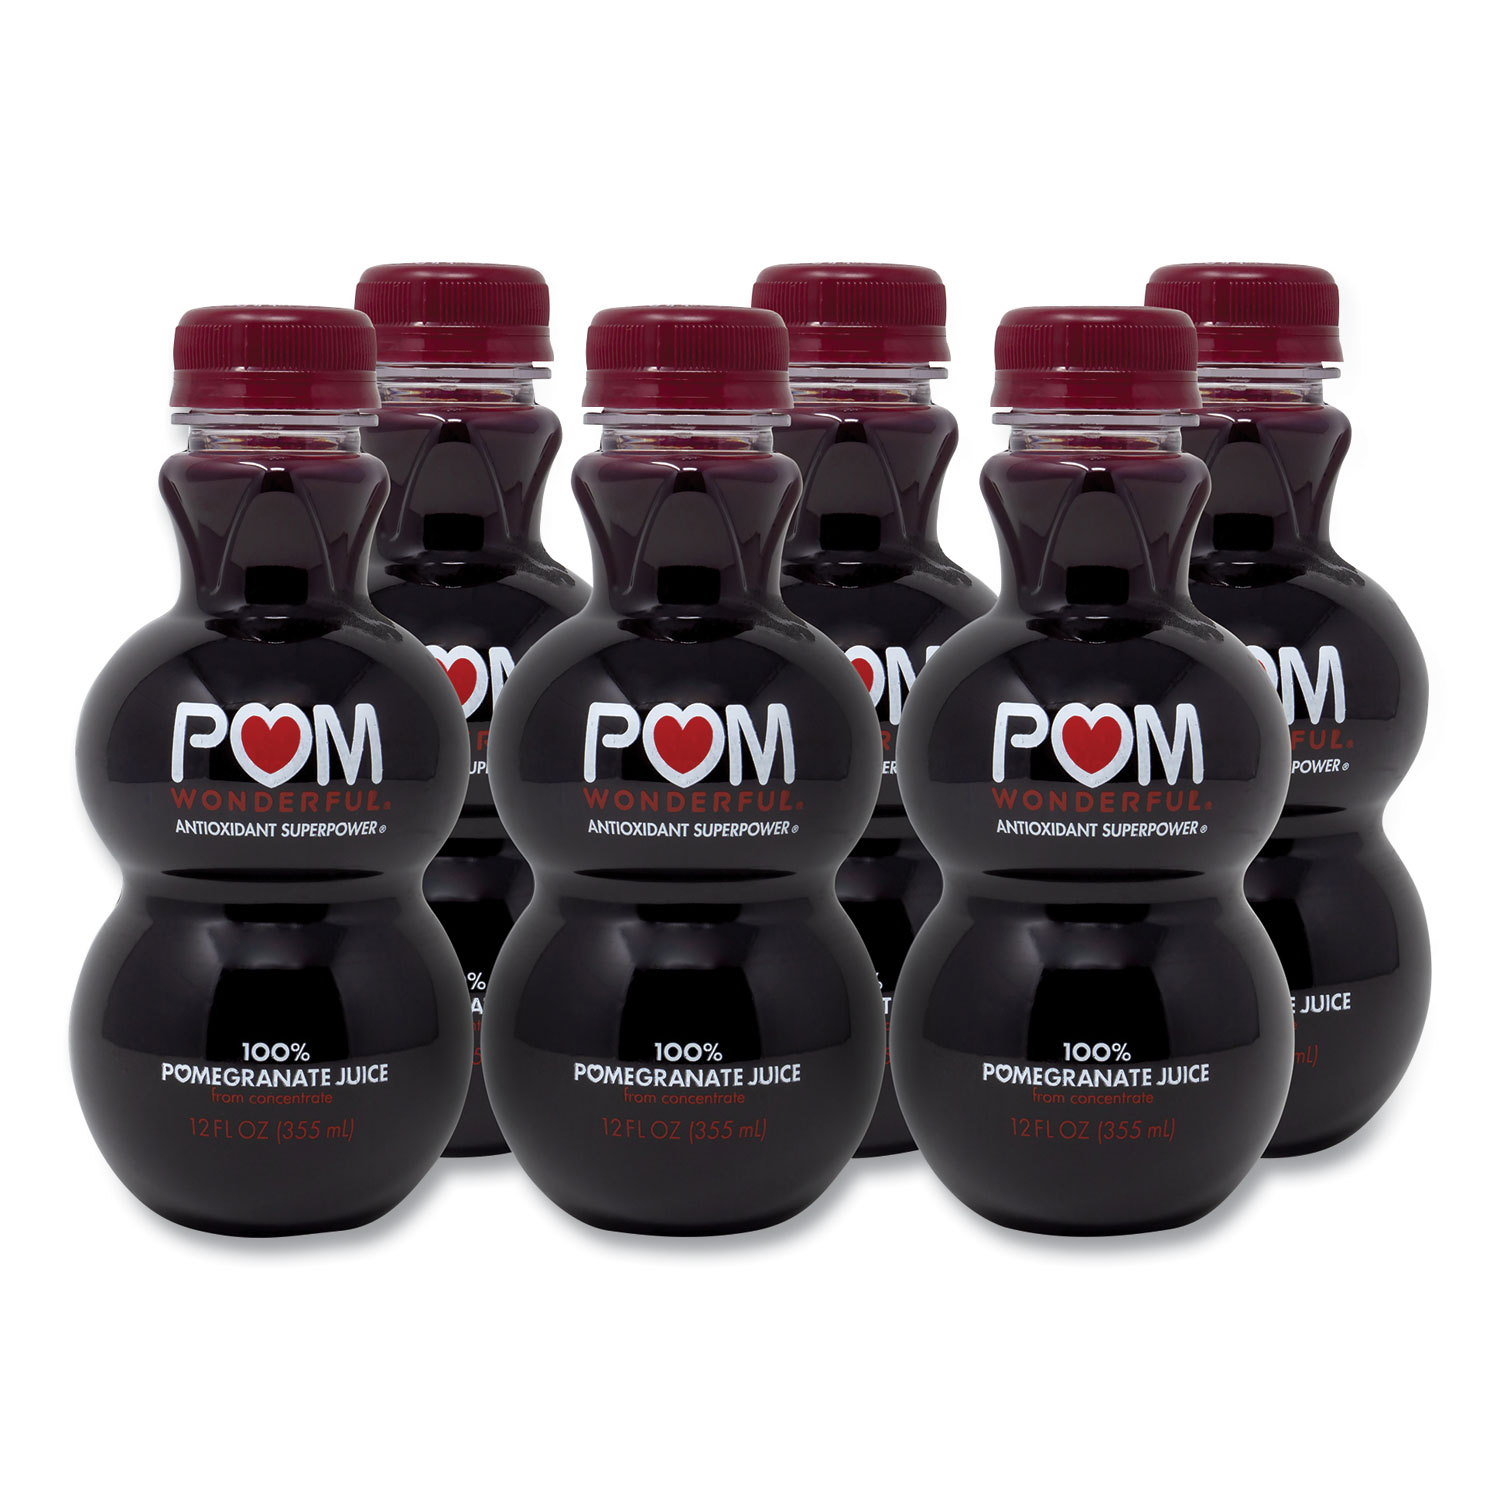  POM Wonderful 12PL00 100% Pomegranate Juice, 12 oz Bottle, 6/Pack, Free Delivery in 1-4 Business Days (GRR90200448) 